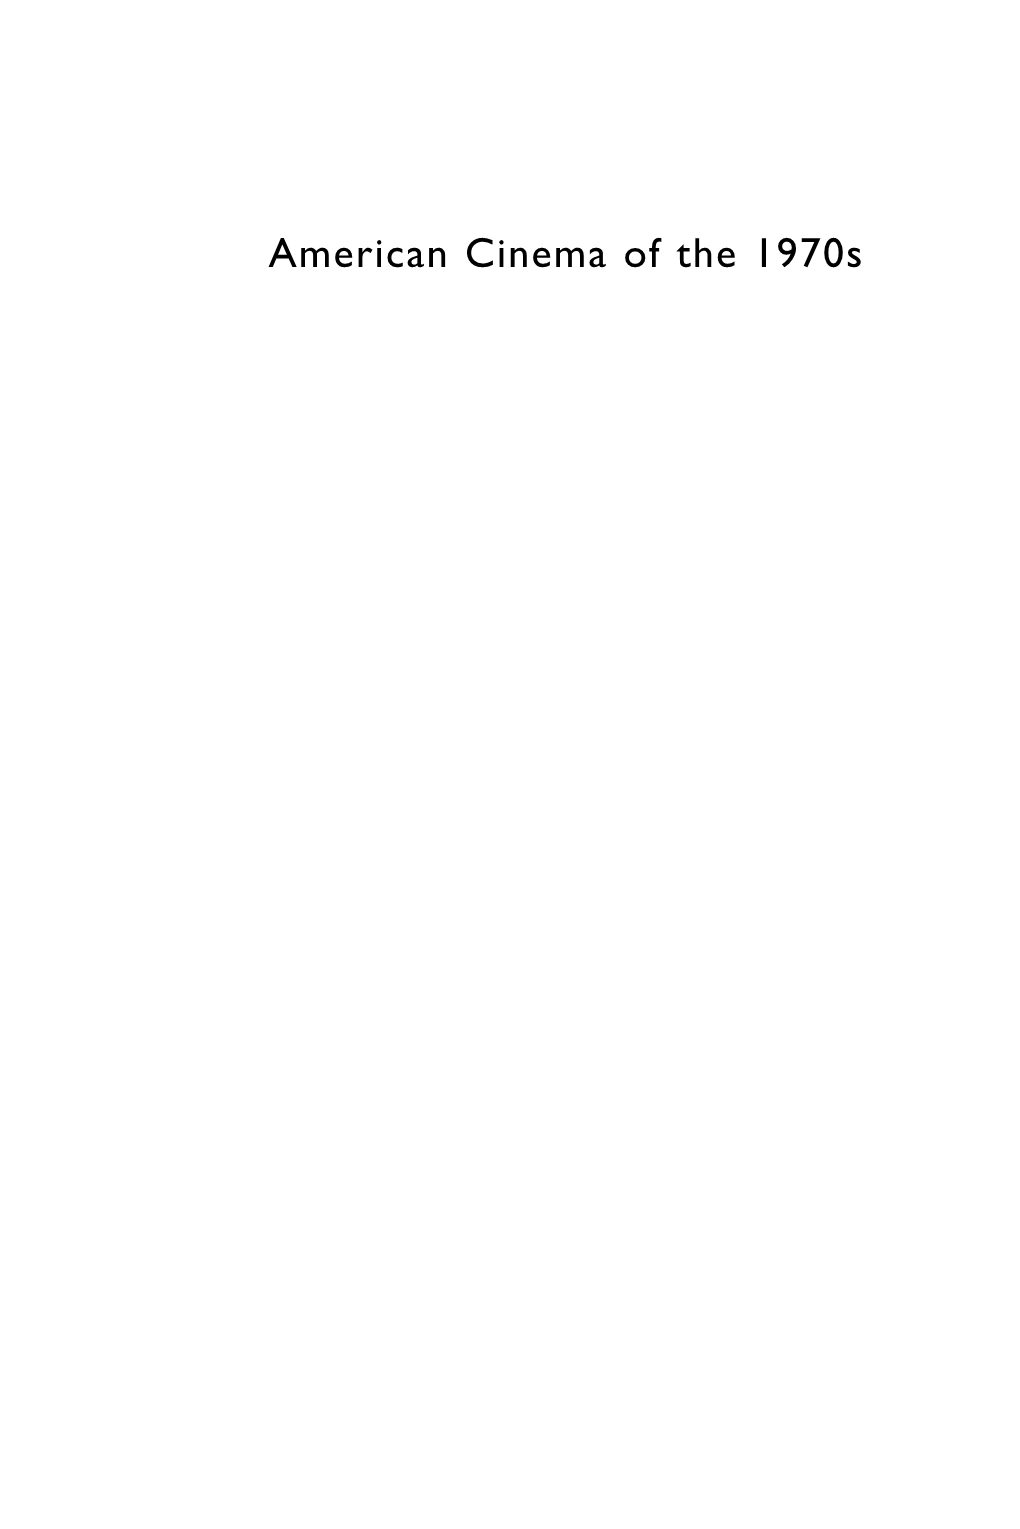 American Cinema of the 1970S SCREEN AMERICAN CULTURE / AMERICAN CINEMA DECADES